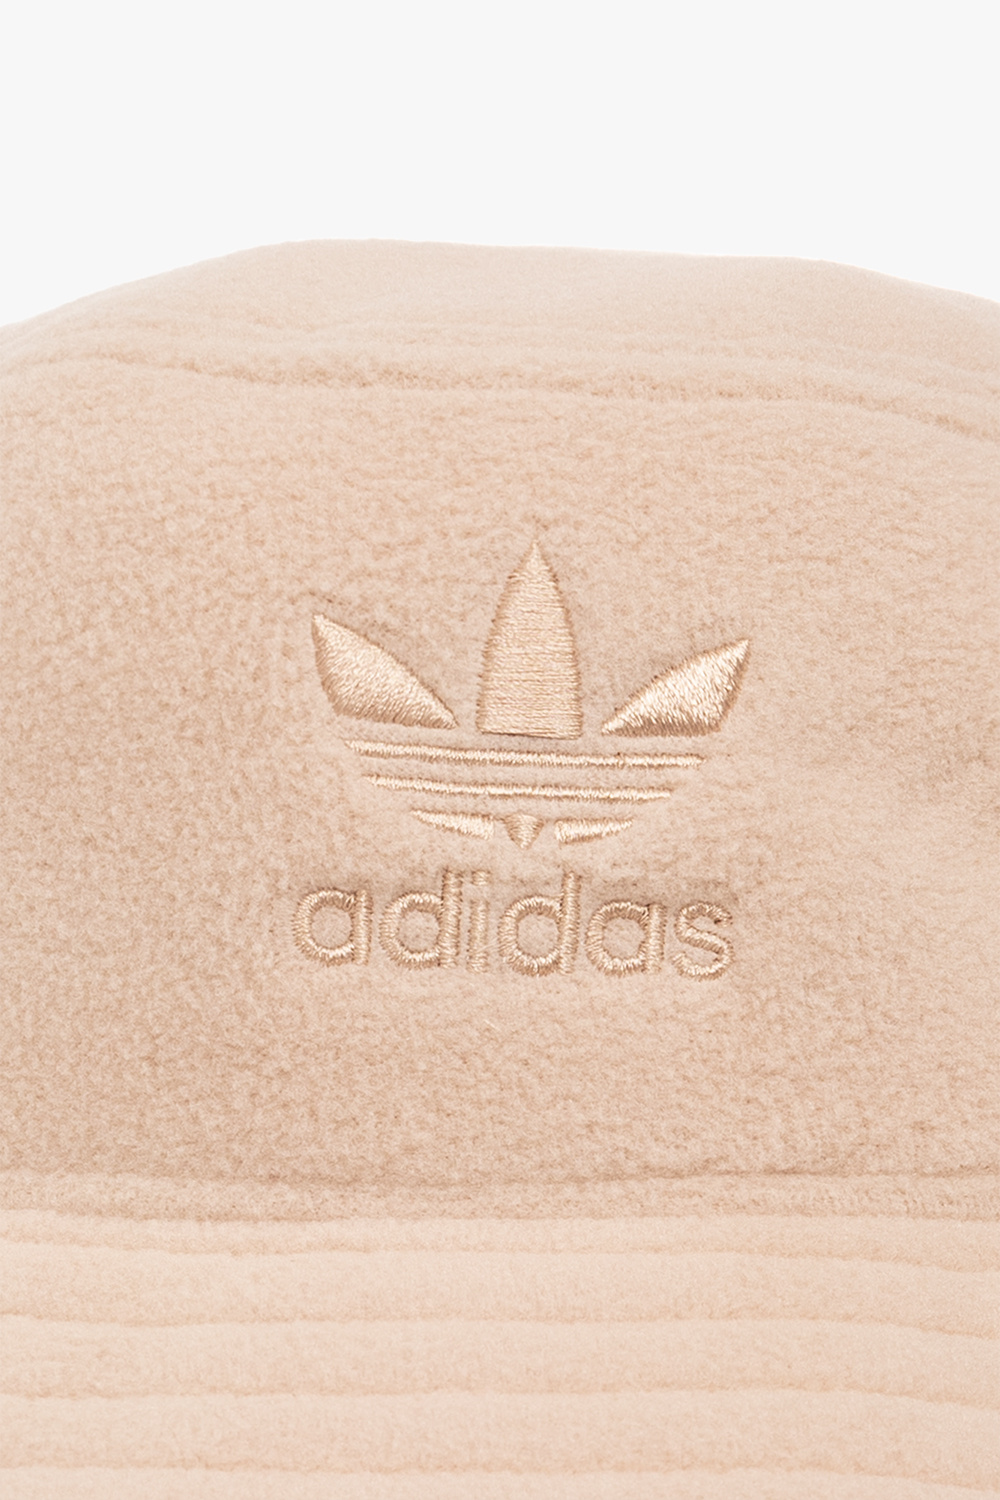 ADIDAS Originals Bucket hat with logo